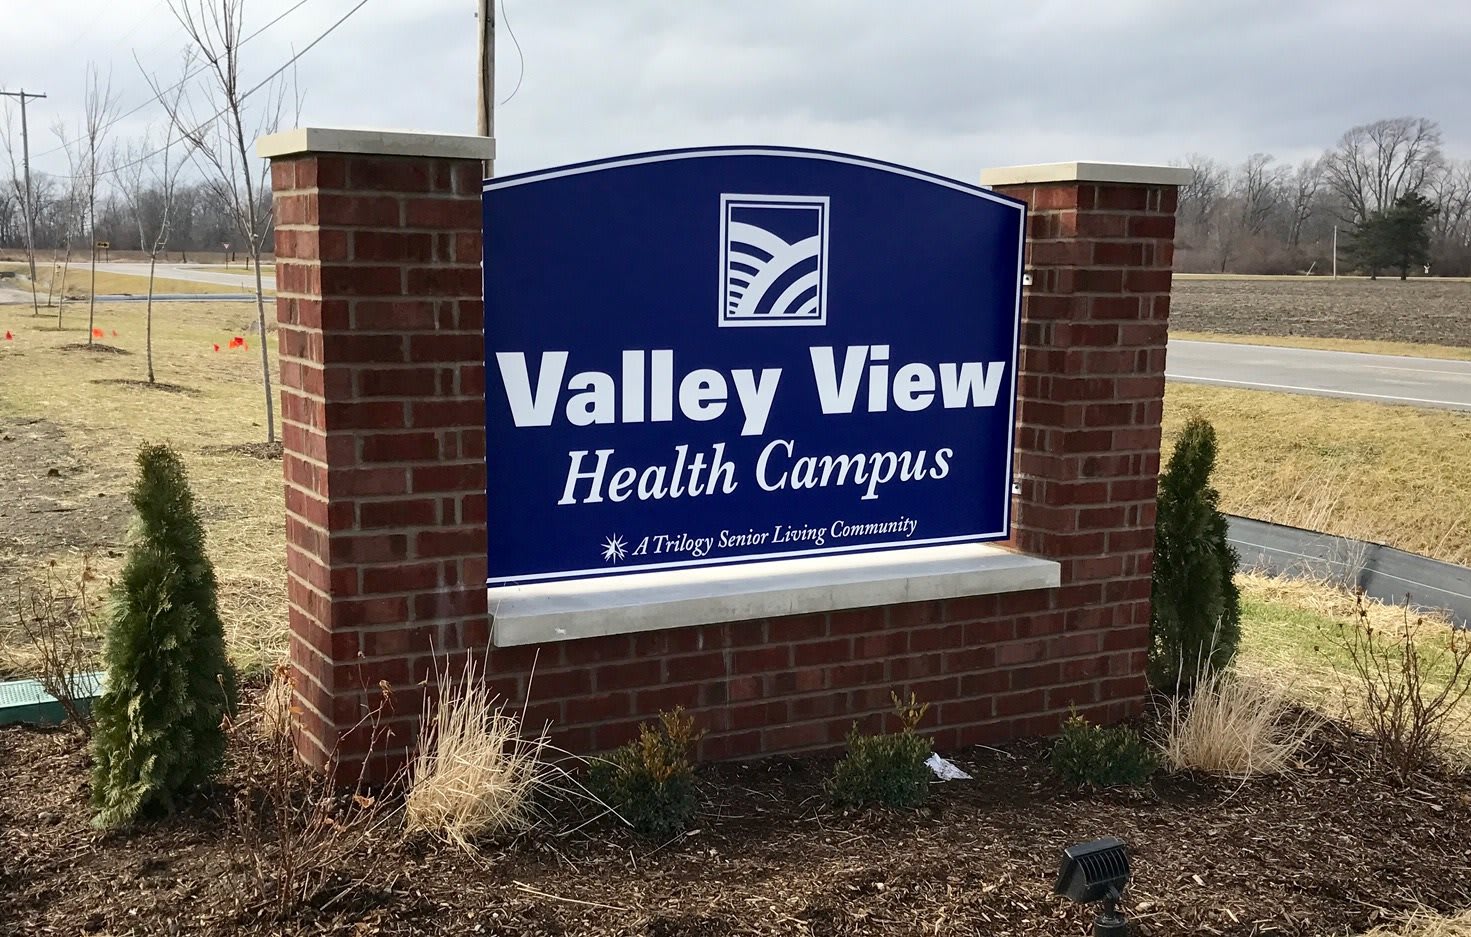 Valley View Health Campus community exterior